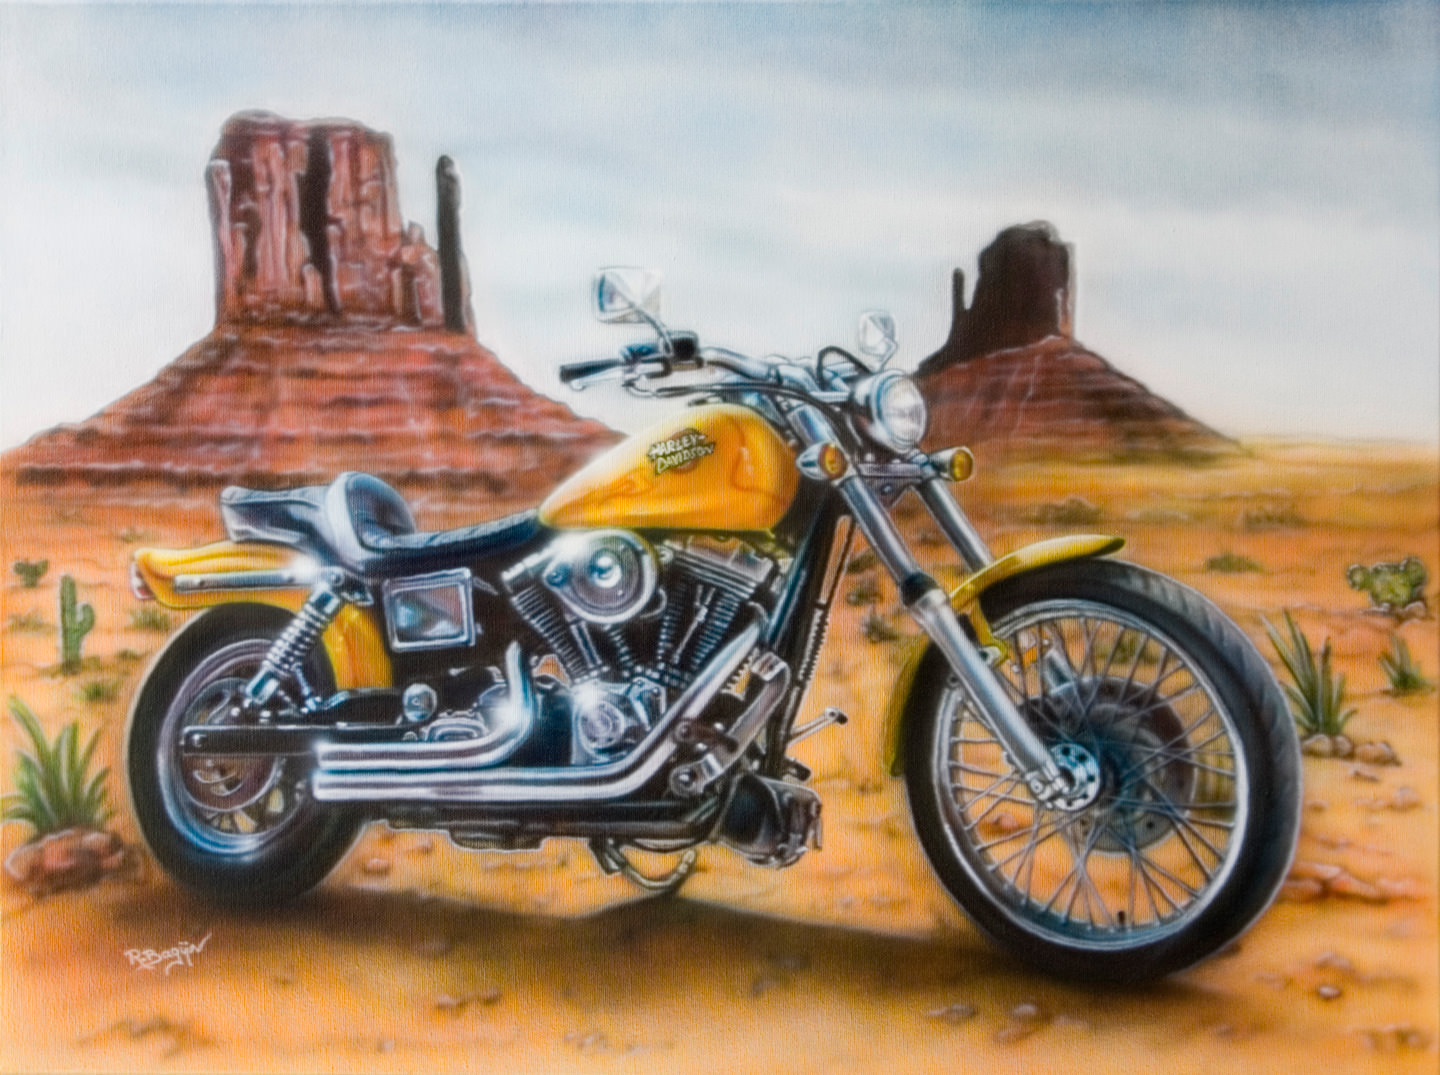 Harley Davidson airbrush schildering, je motor als schilderij